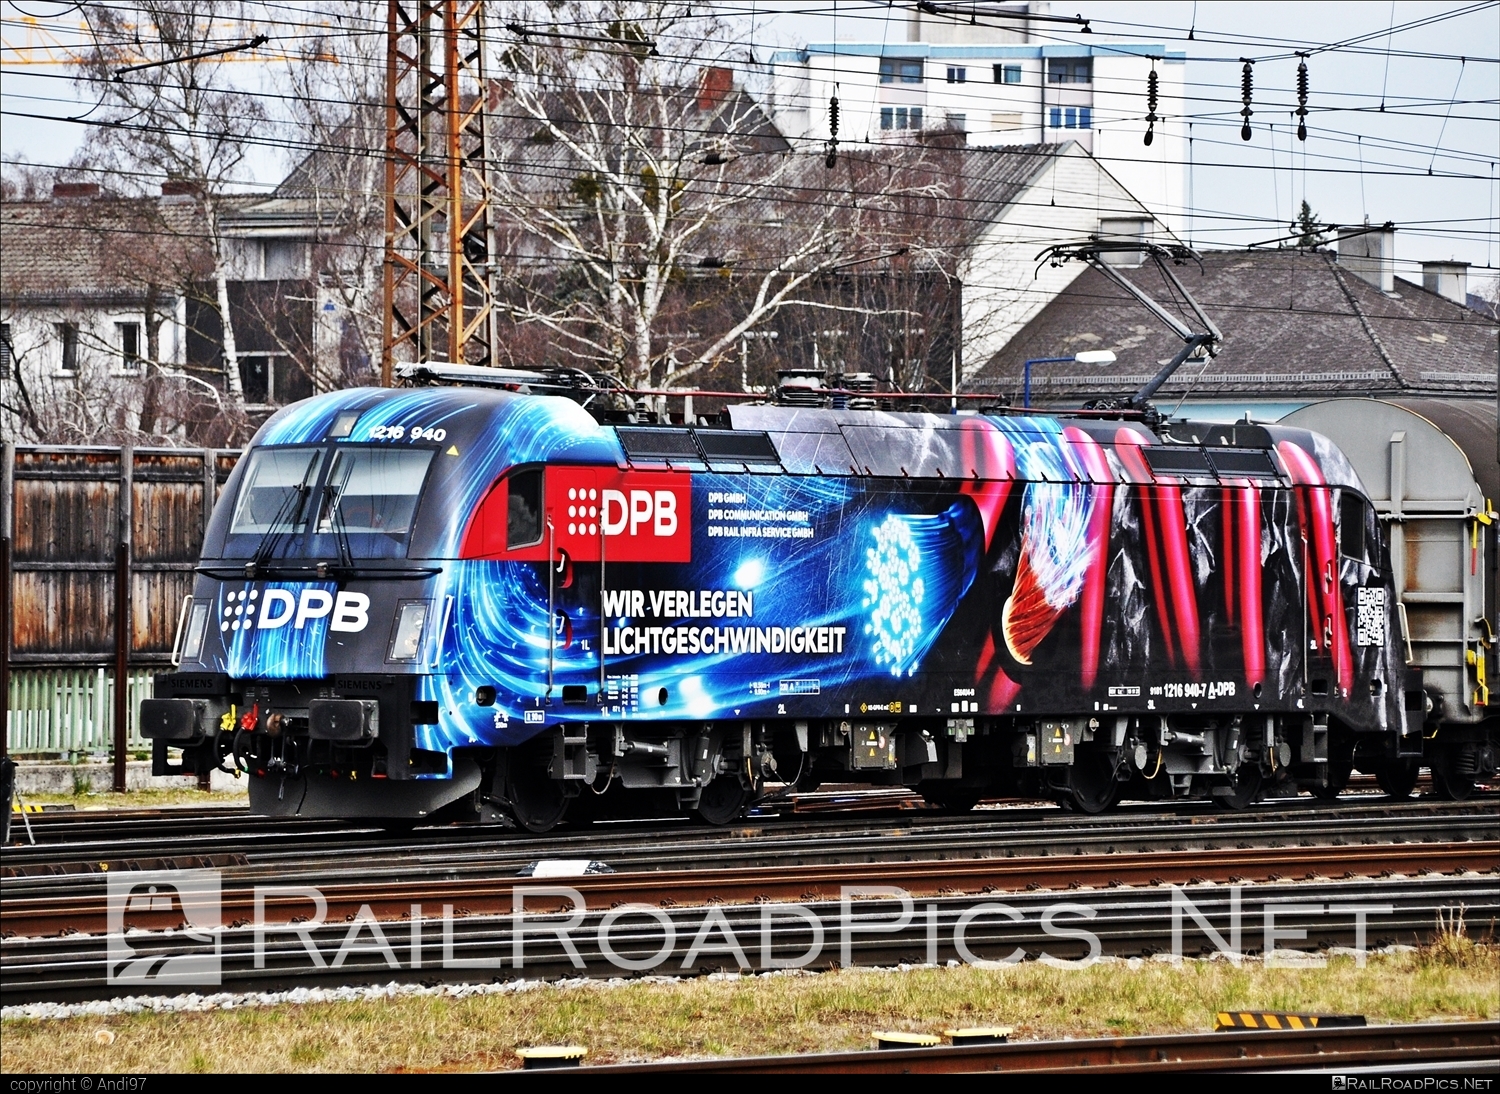 Siemens ES 64 U4 - 1216 940 operated by DPB Rail Infra Service GmbH #dpb #dpbRailInfraService #dpbRailInfraServiceGmbh #es64 #es64u4 #eurosprinter #siemens #siemensEs64 #siemensEs64u4 #siemenstaurus #tauruslocomotive